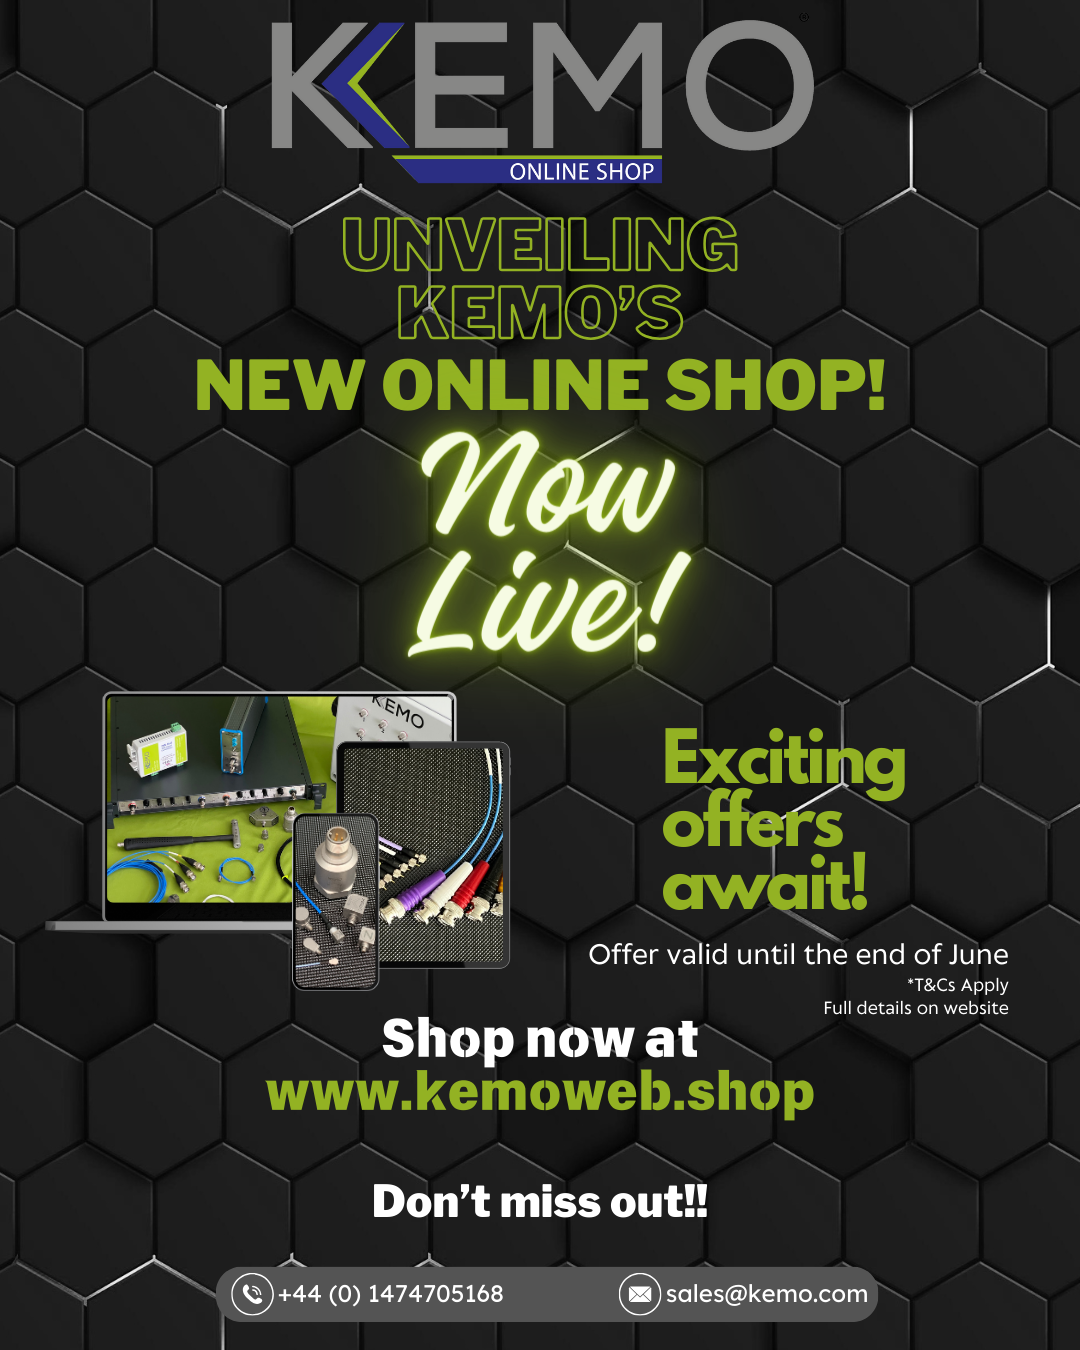 Kemo's new online shop